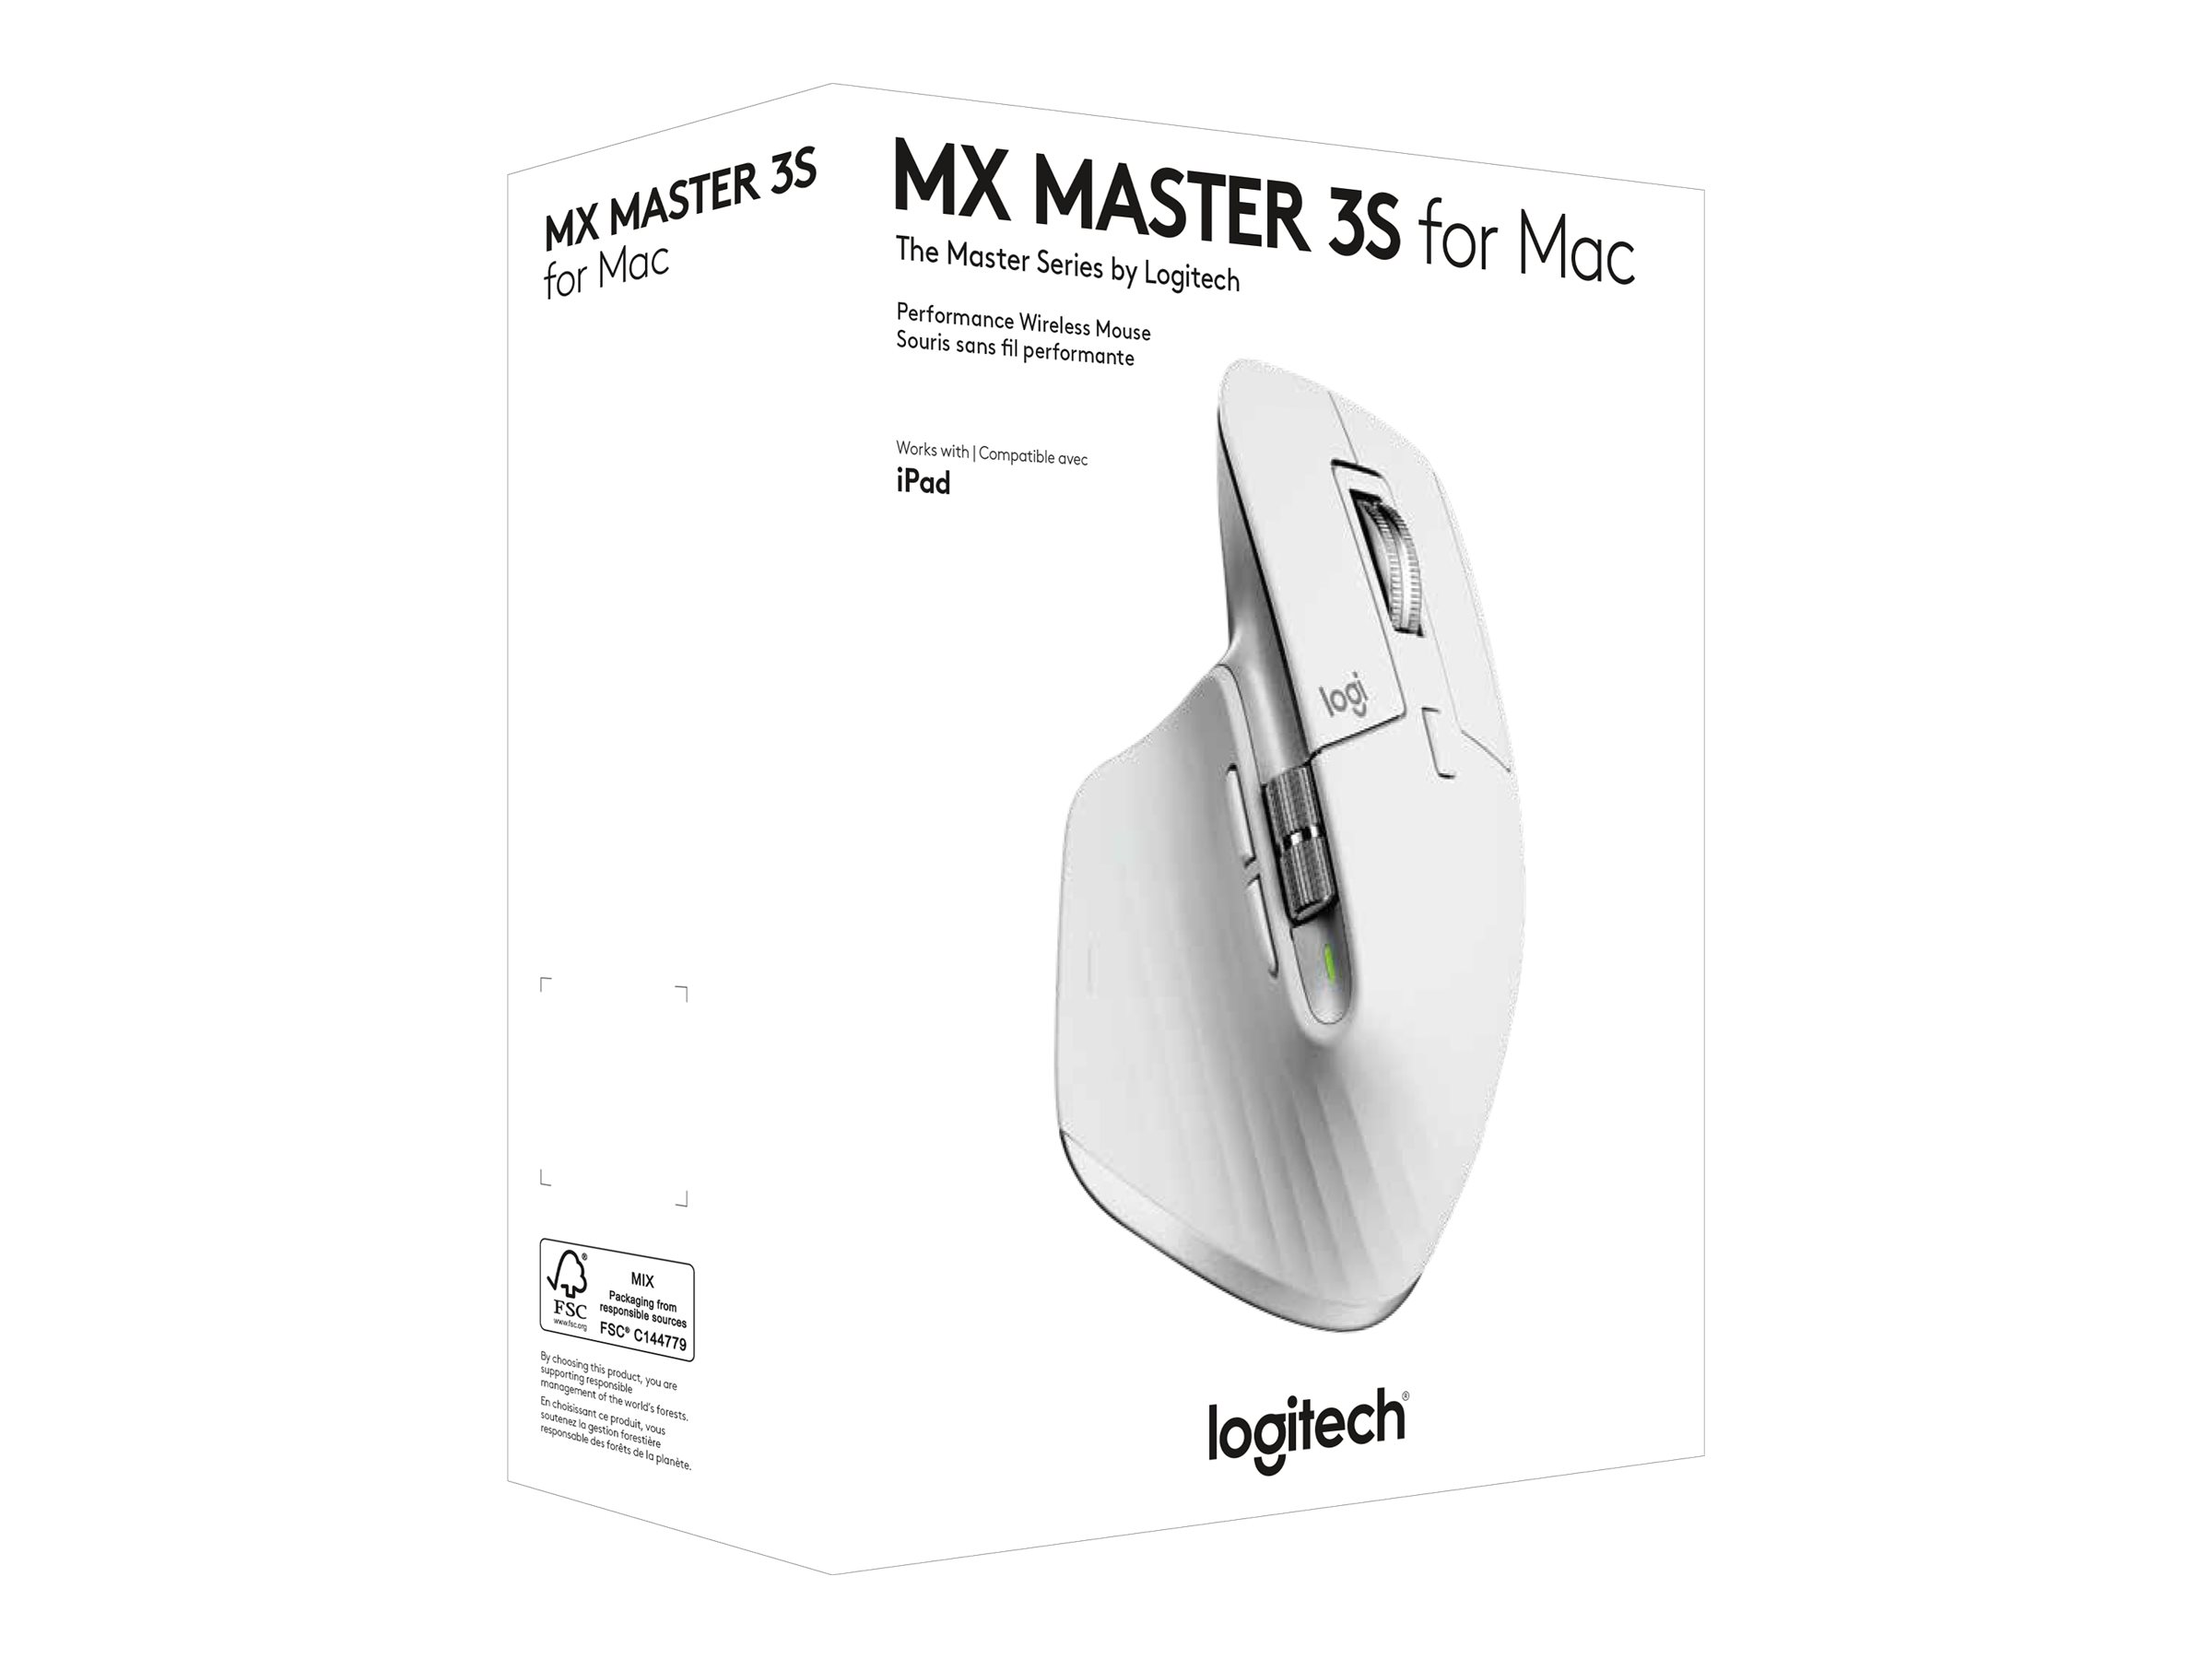 Logitech Master Series MX Master 3S for Mac | www.shi.com